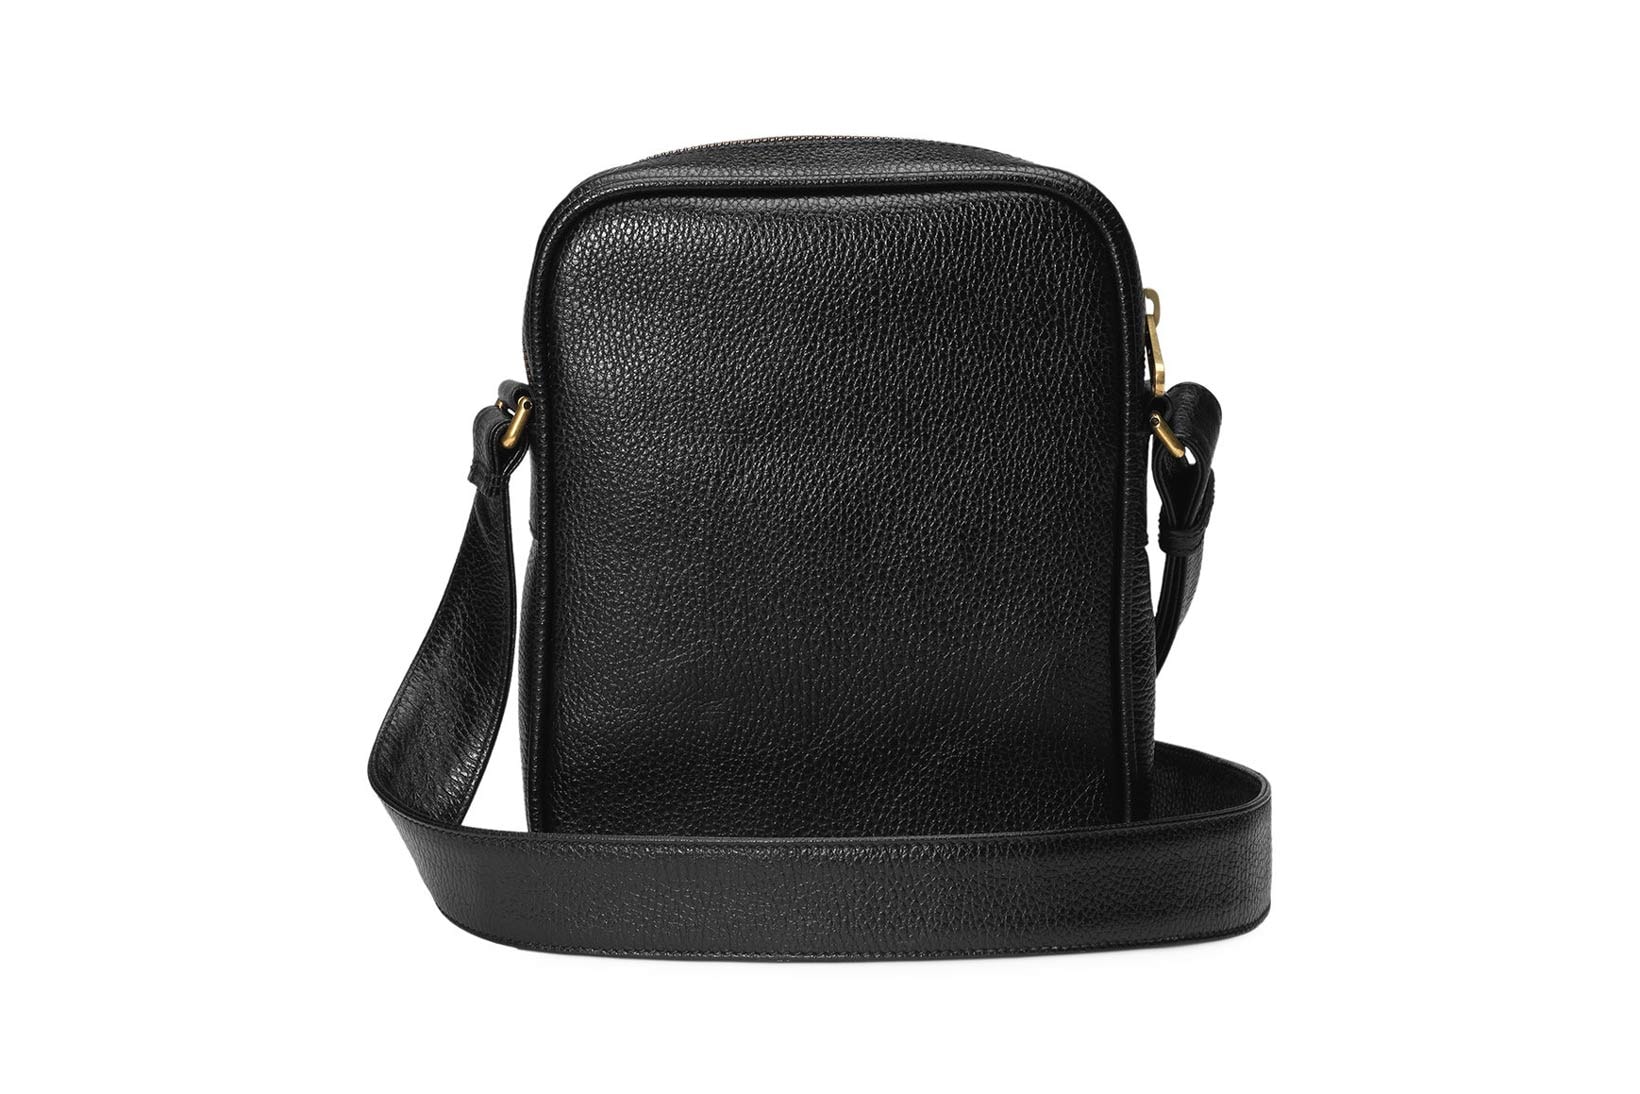 Gucci Logo Messenger Bag Black